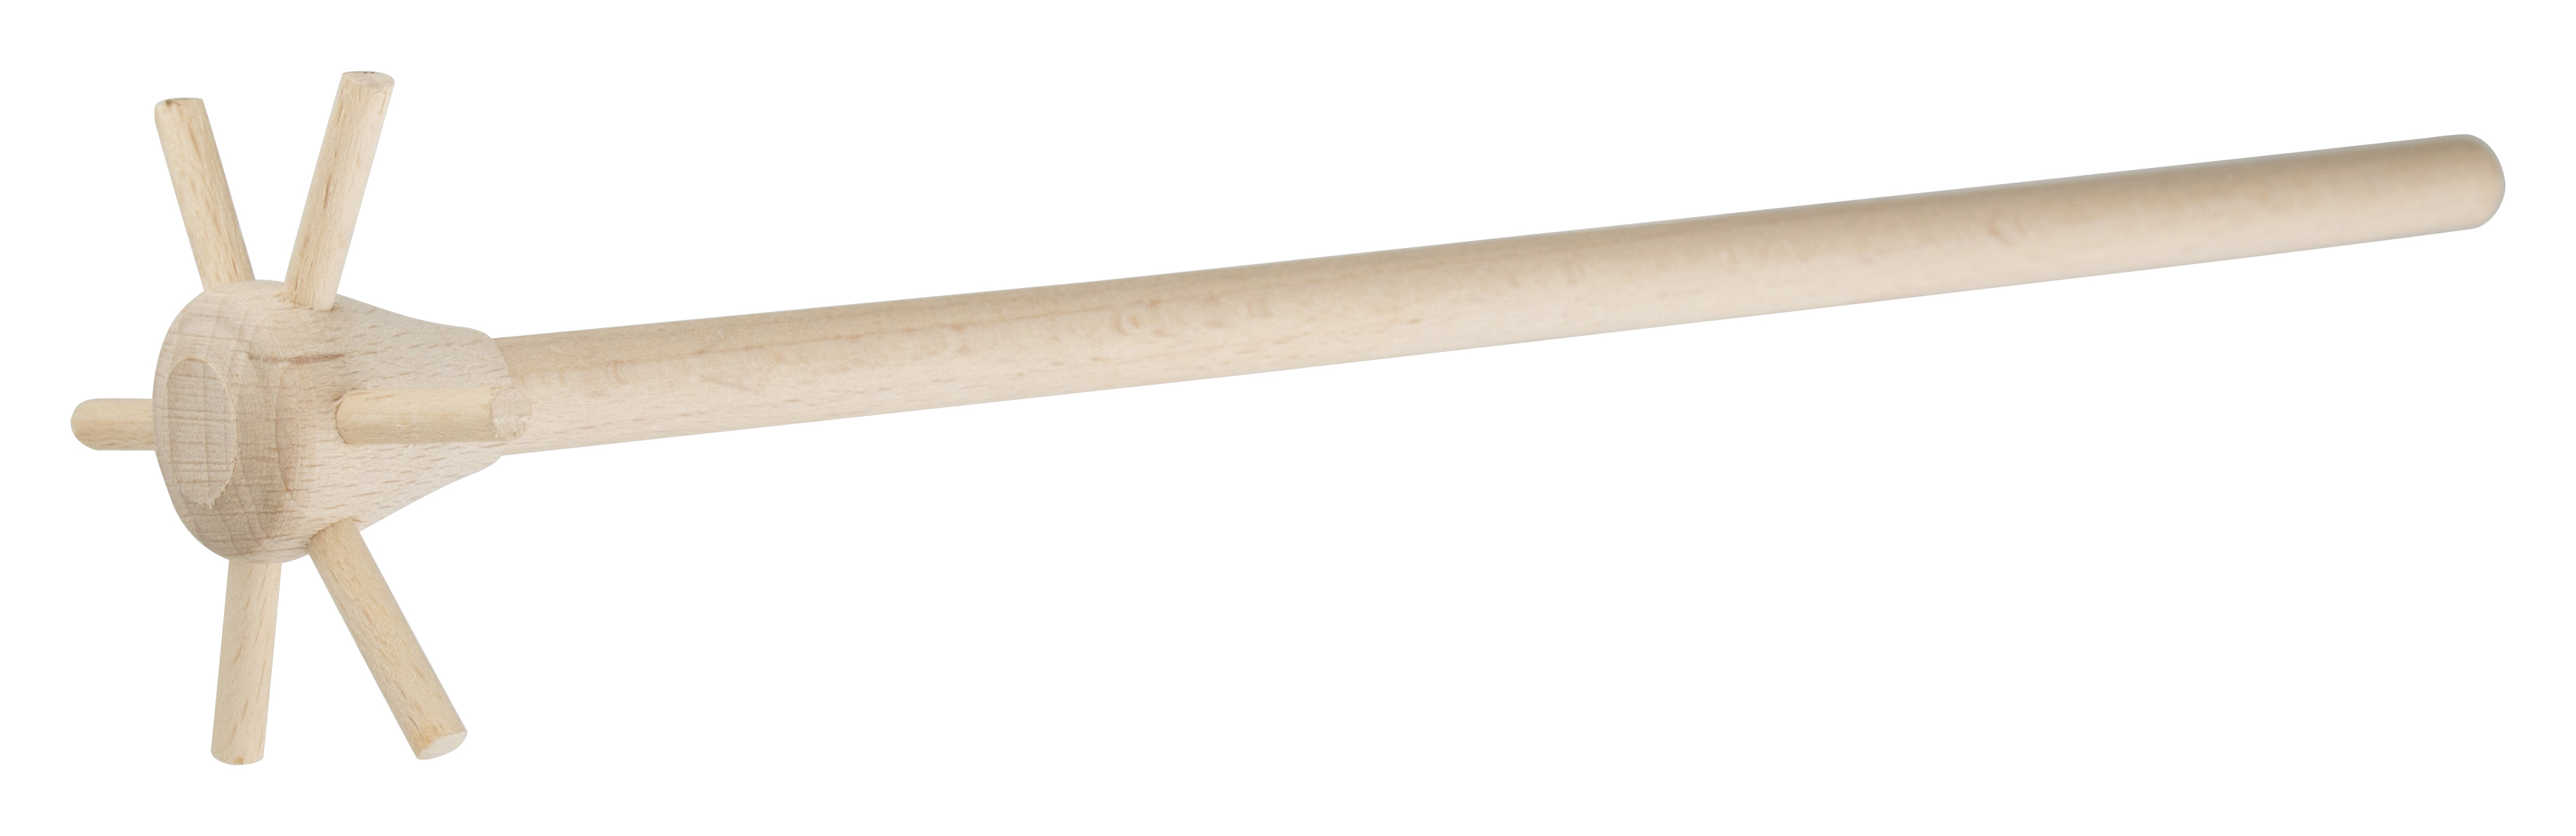 Swizzle stick, wooden - 27,5cm